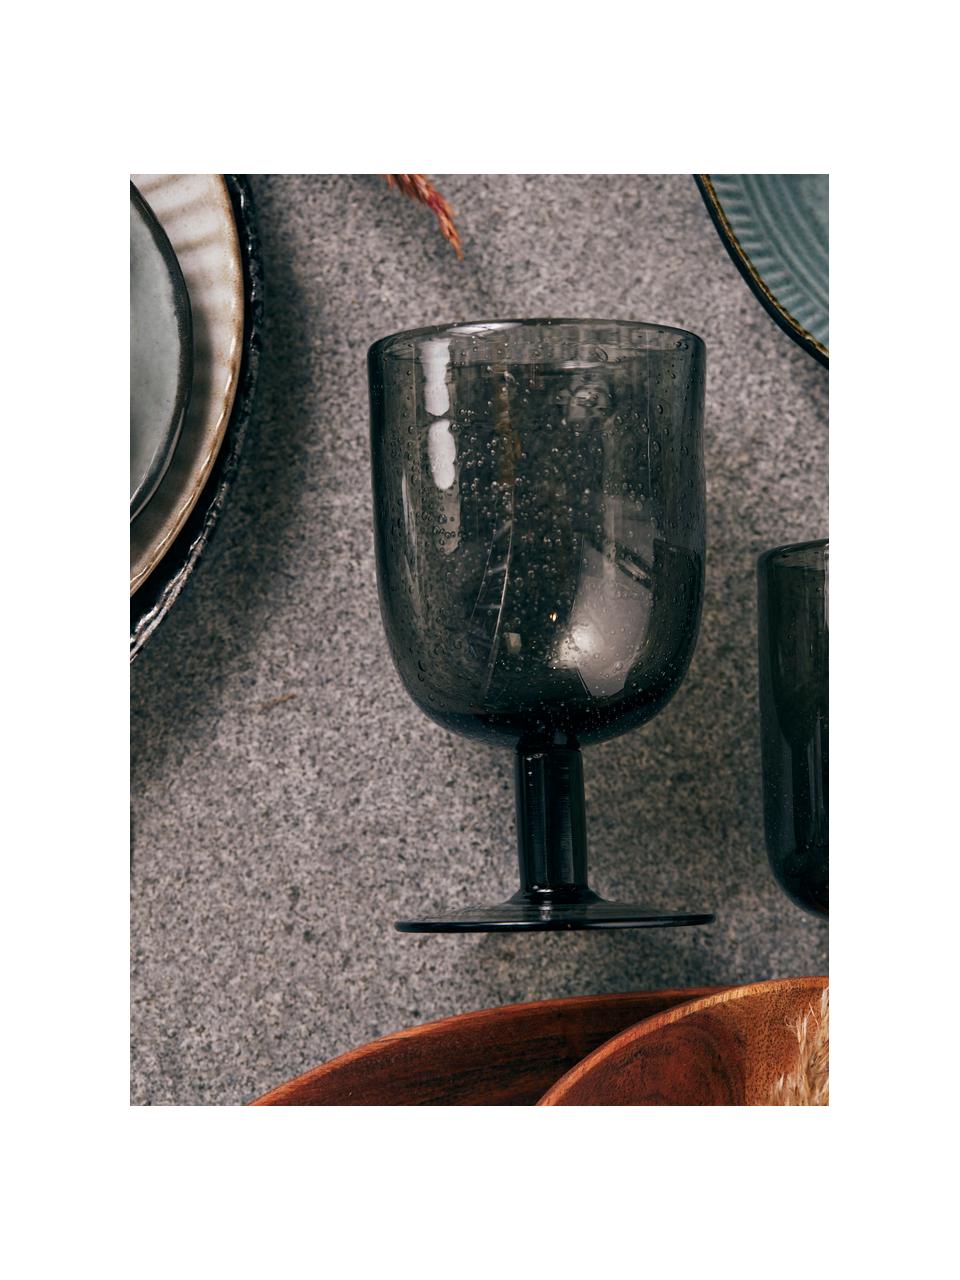 Mondgeblazen wijnglazen Leyla, 6 stuks, Glas, Grijs, transparant, Ø 8 x H 14 cm, 320 ml